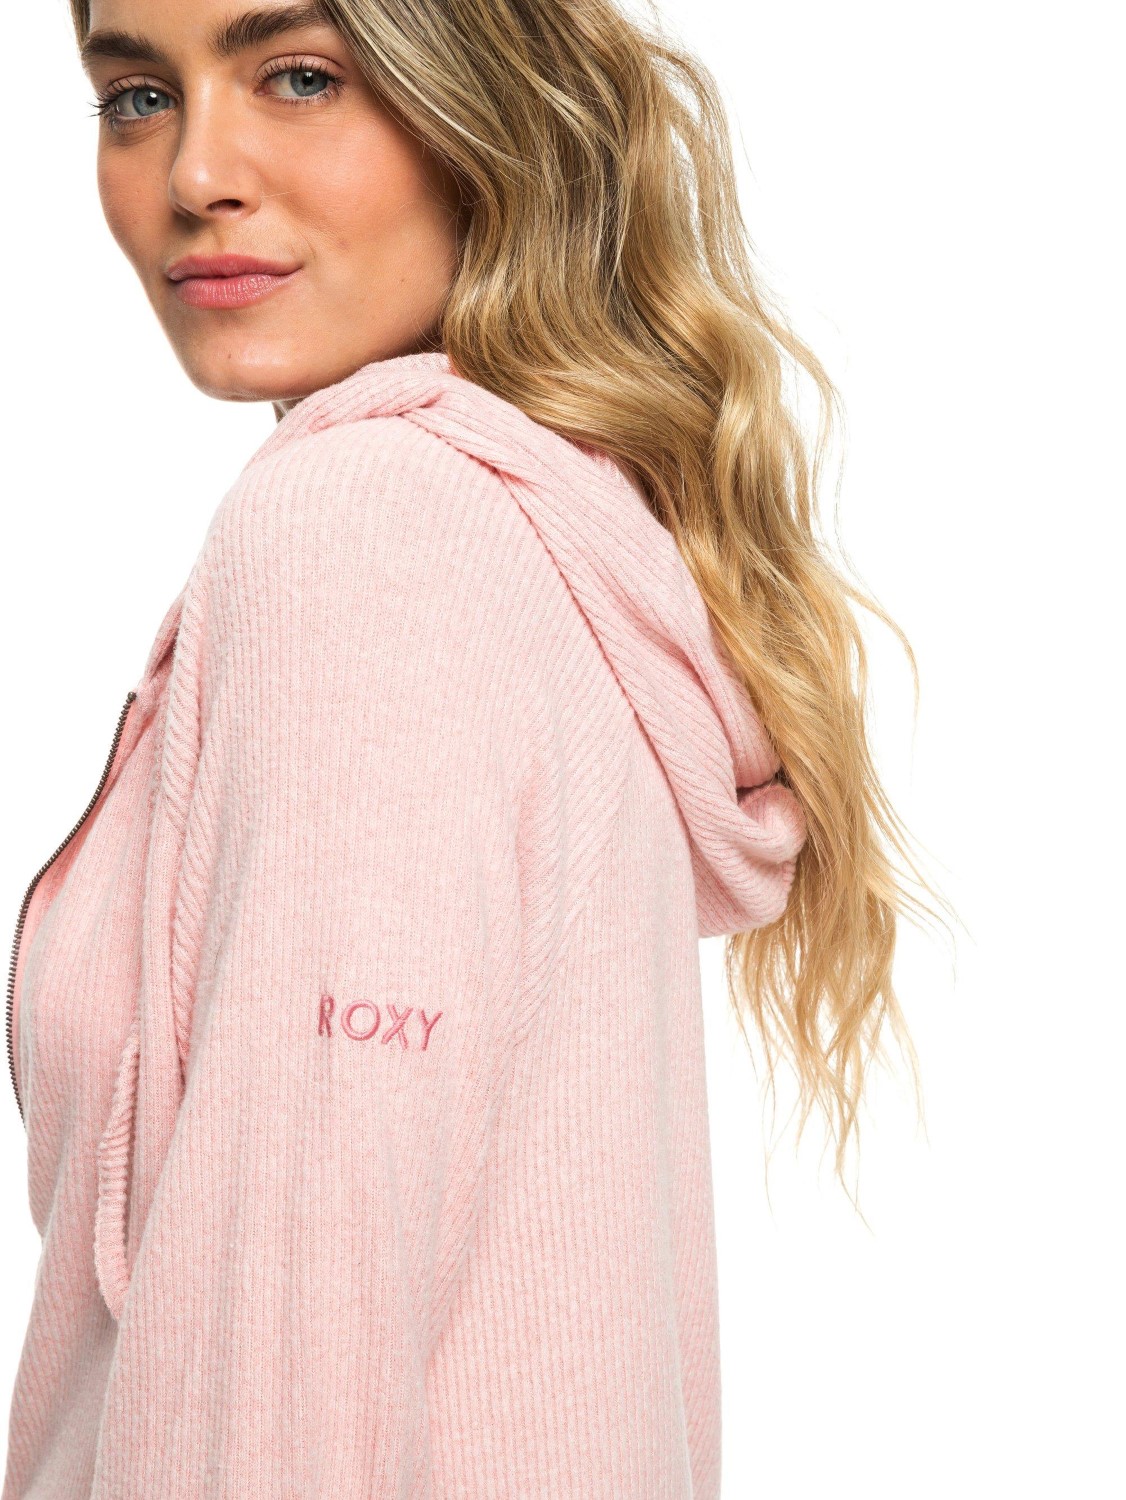 Roxy Cloudy Skies Sweater 2019